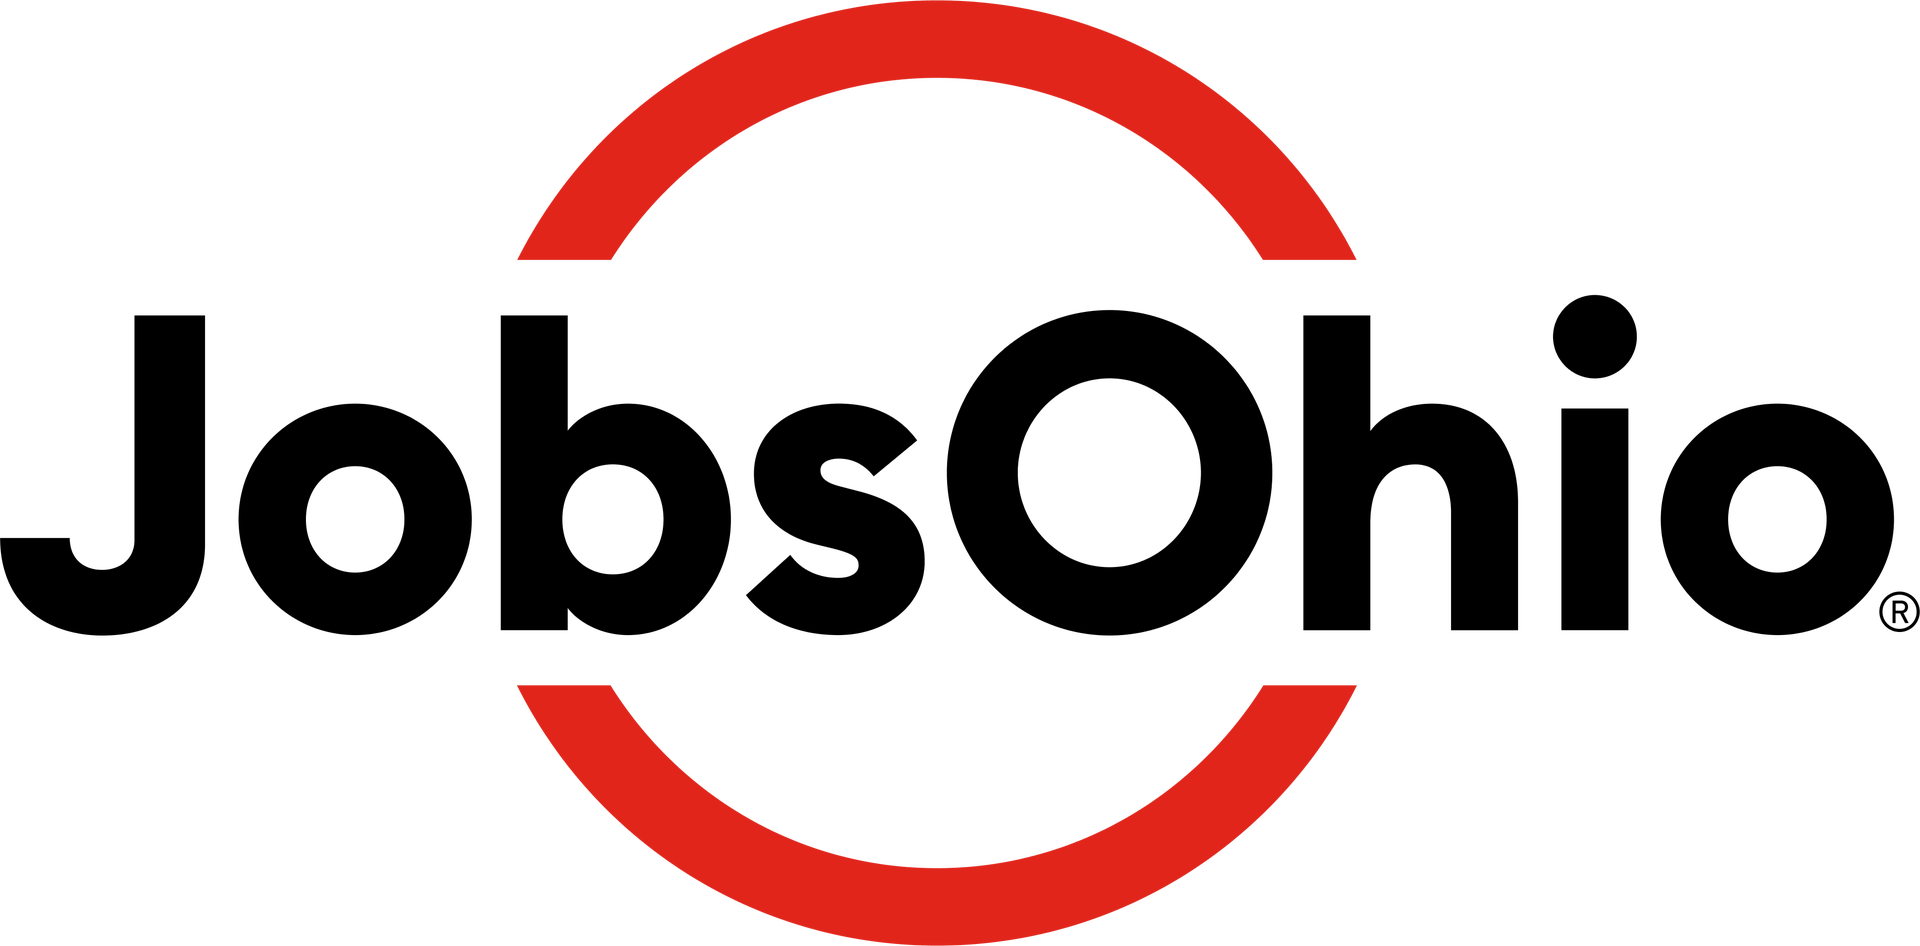 JobsOhio primary logo